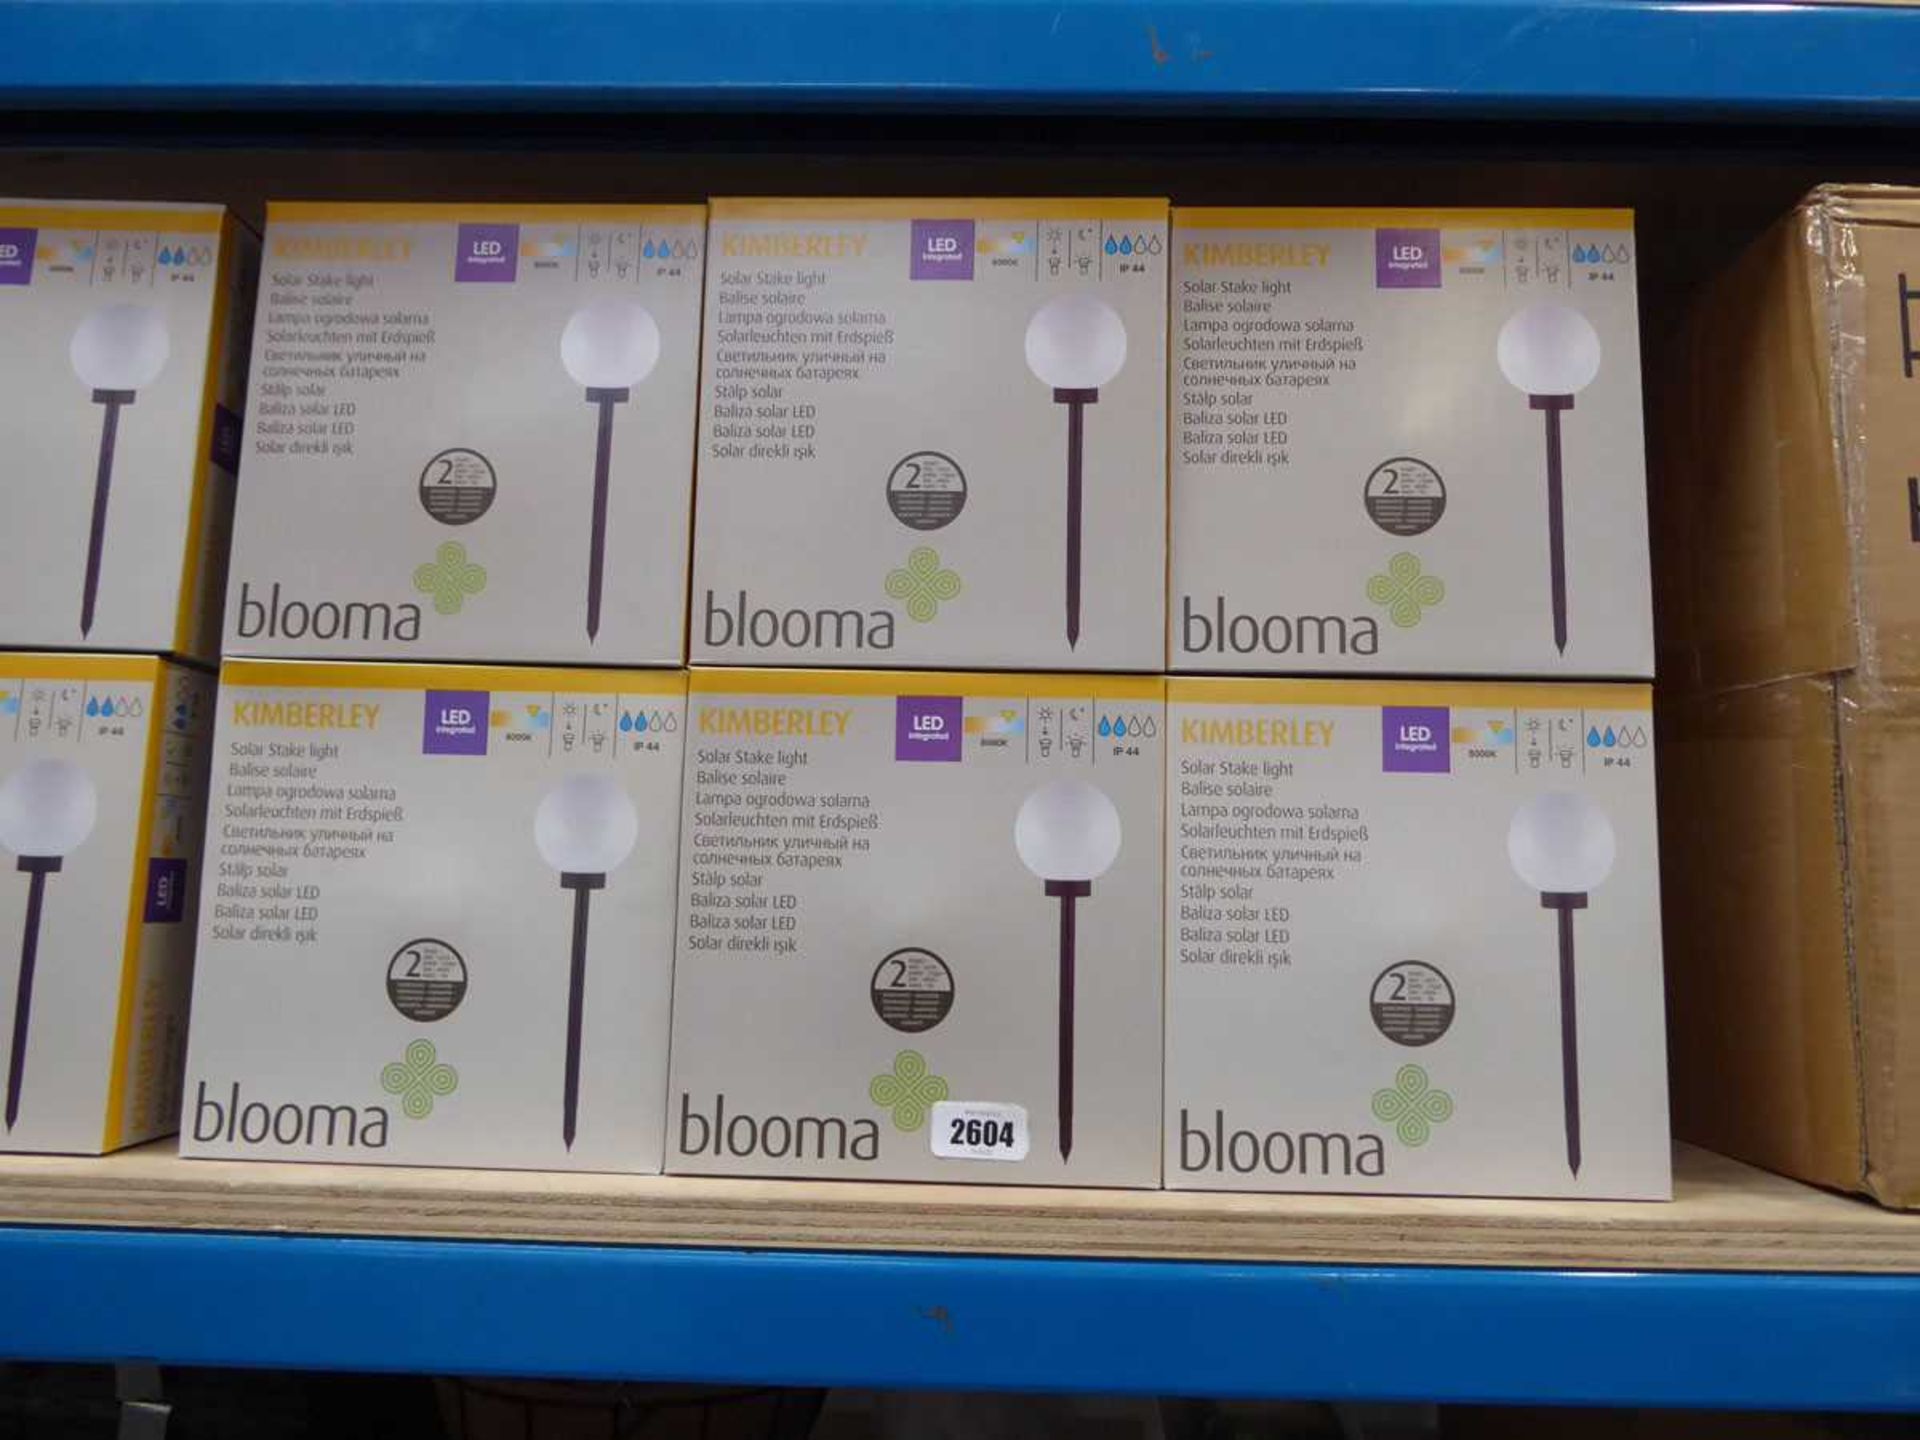 Set of 6 boxed bloomer Kimberley solar stake light sets